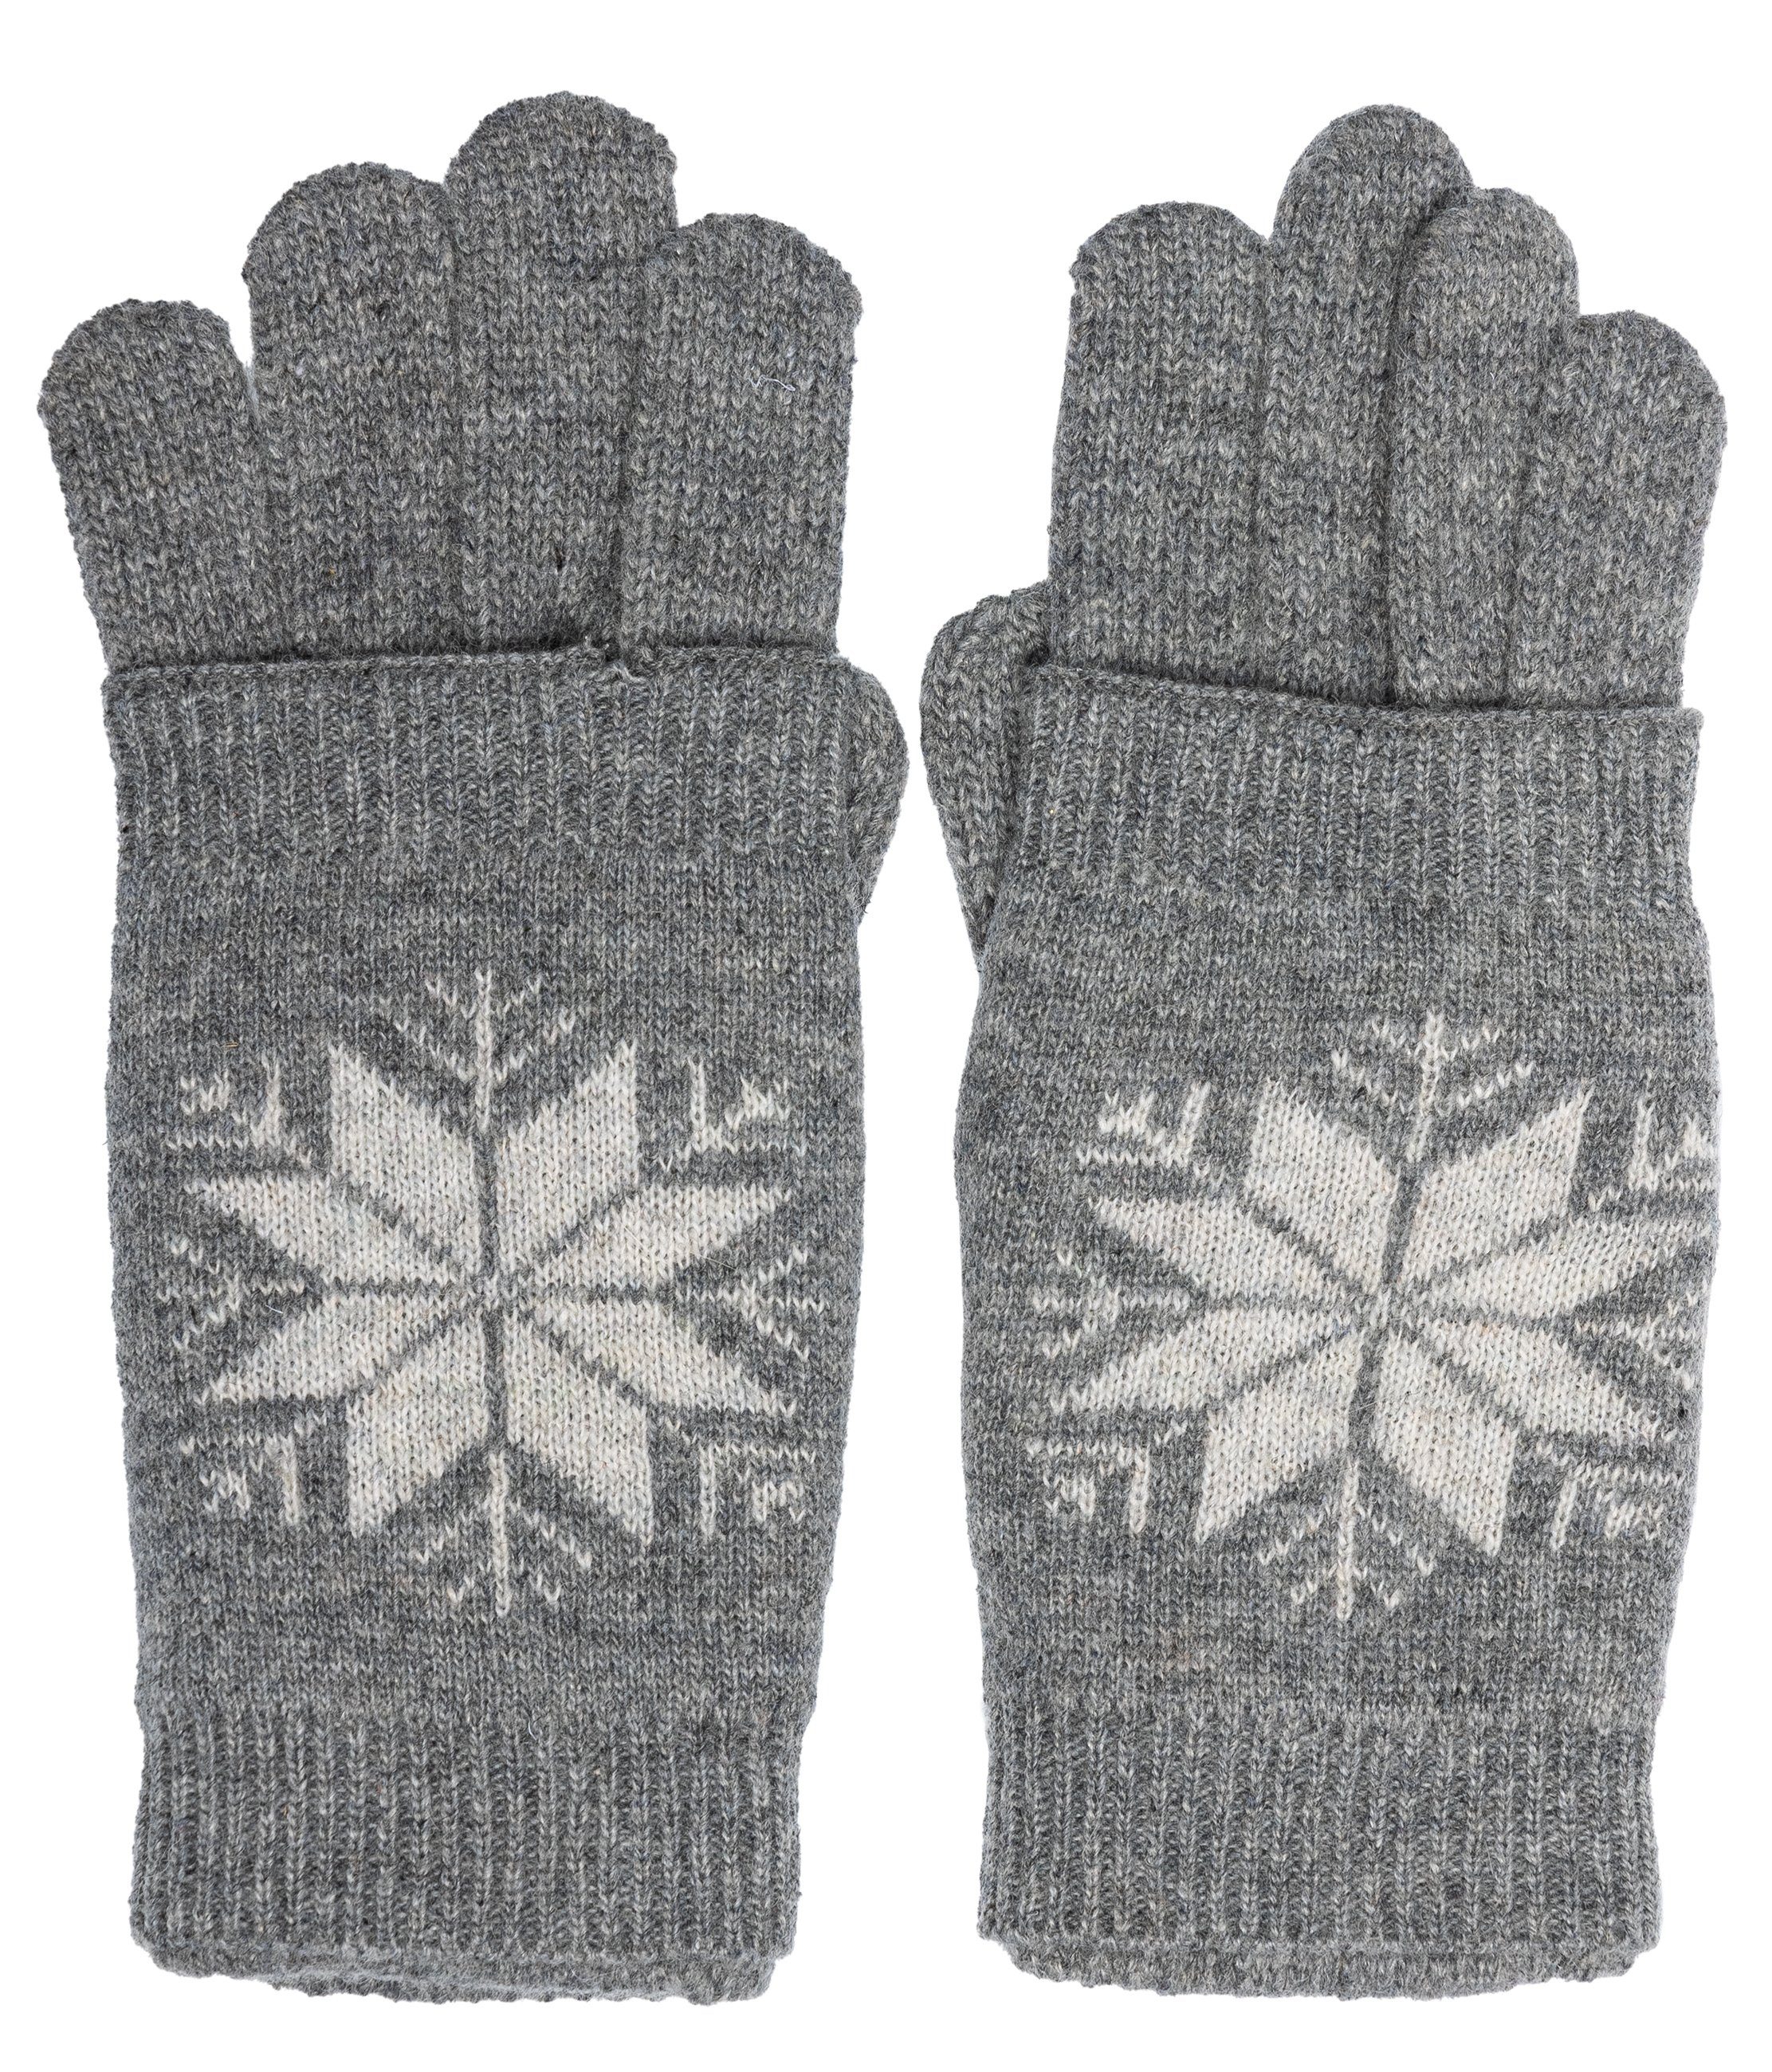 Caspar Strickhandschuhe GLV018 warme Damen Strick Handschuhe mit Eiskristall Dekor grau